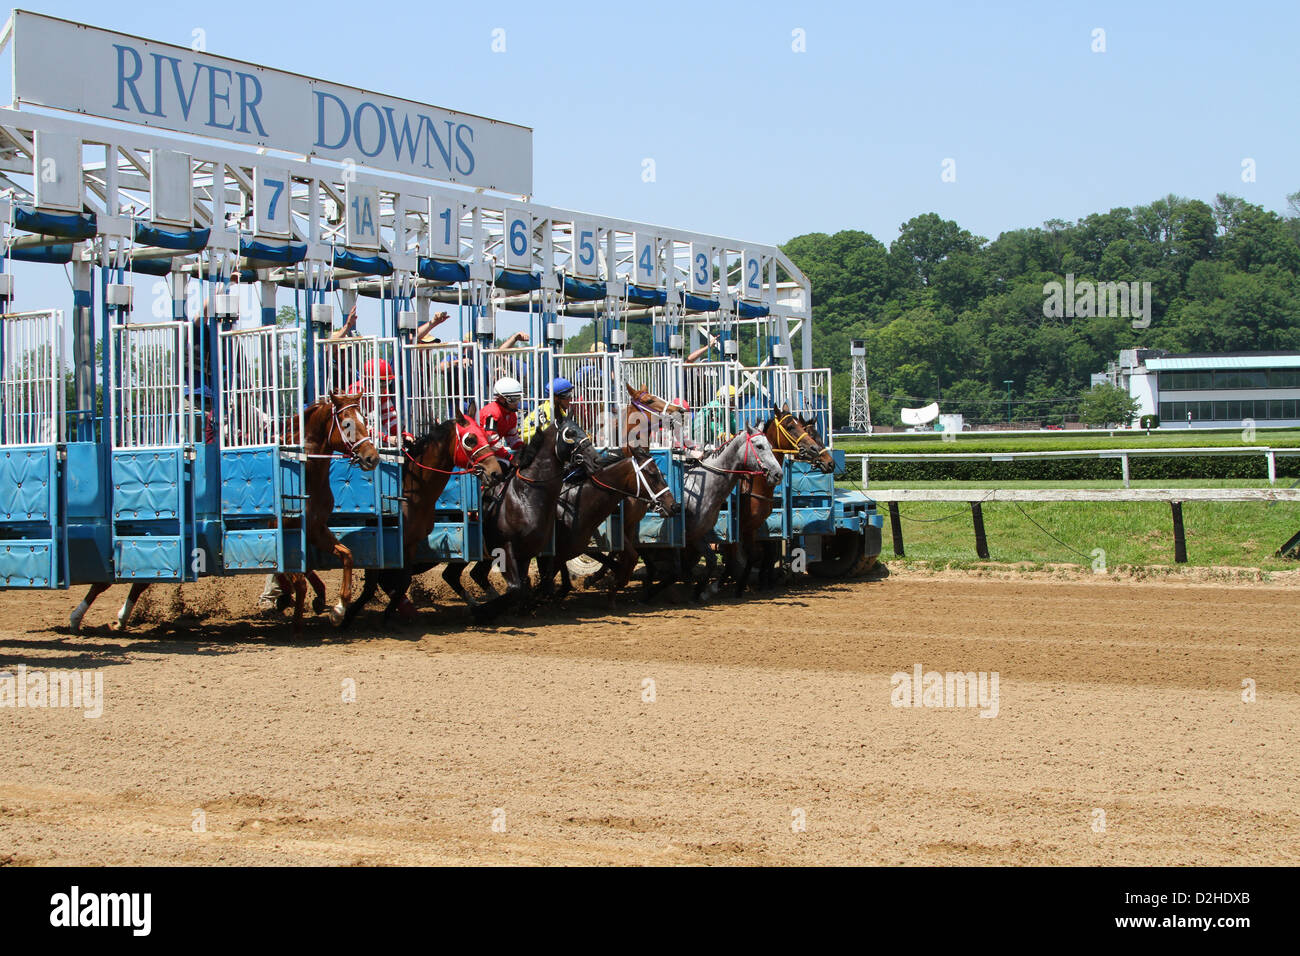 Horses at the Starting Gates. Horse Racing at River Downs track, Cincinnati, Ohio, USA. Stock Photo